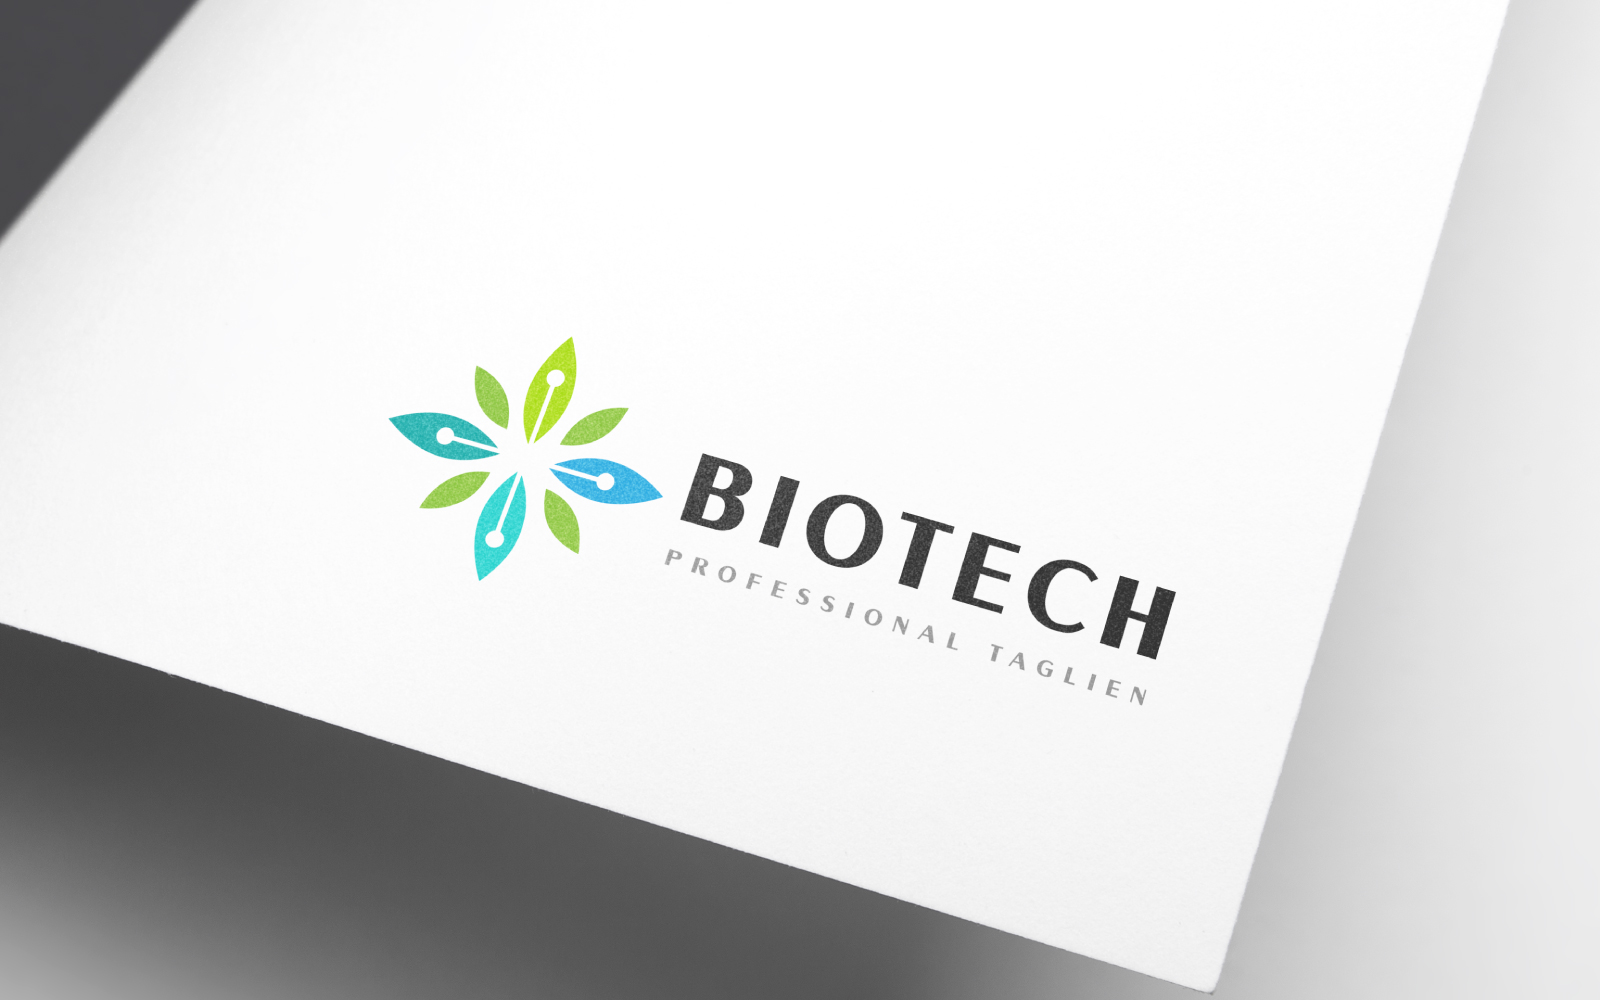 Premium Vector | Biotech logo